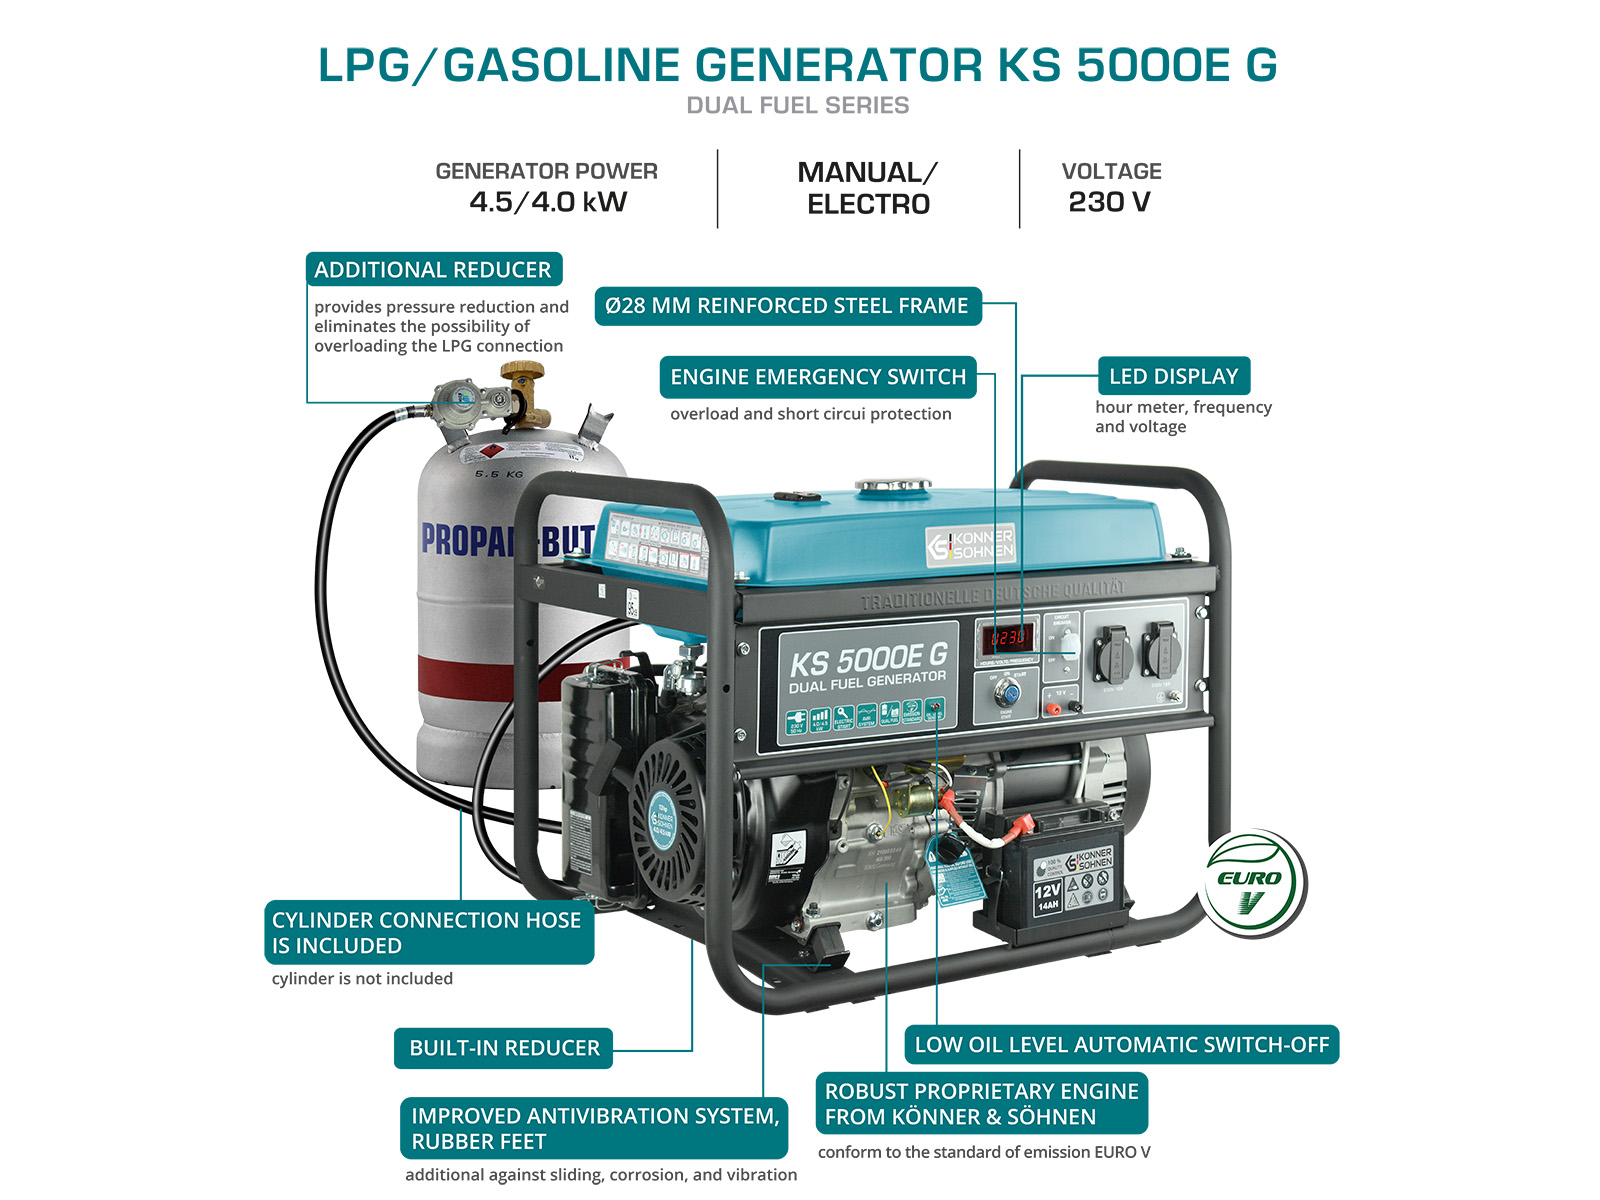 LPG/Gasoline Generator "Könner & Söhnen" KS 5000E G